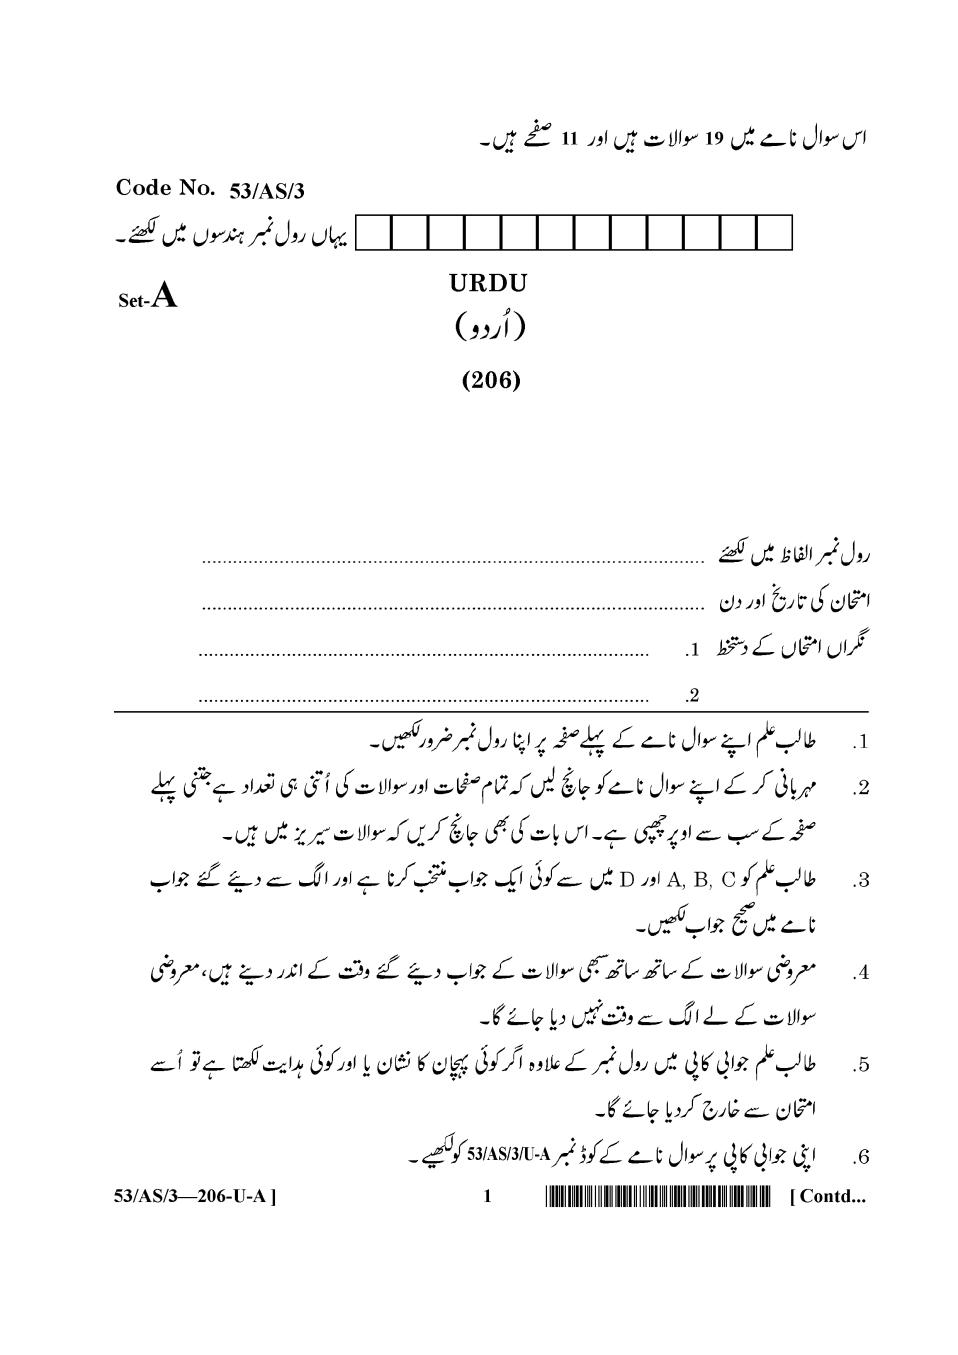 NIOS Class 10 Question Paper Oct 2016 - Urdu - Page 1